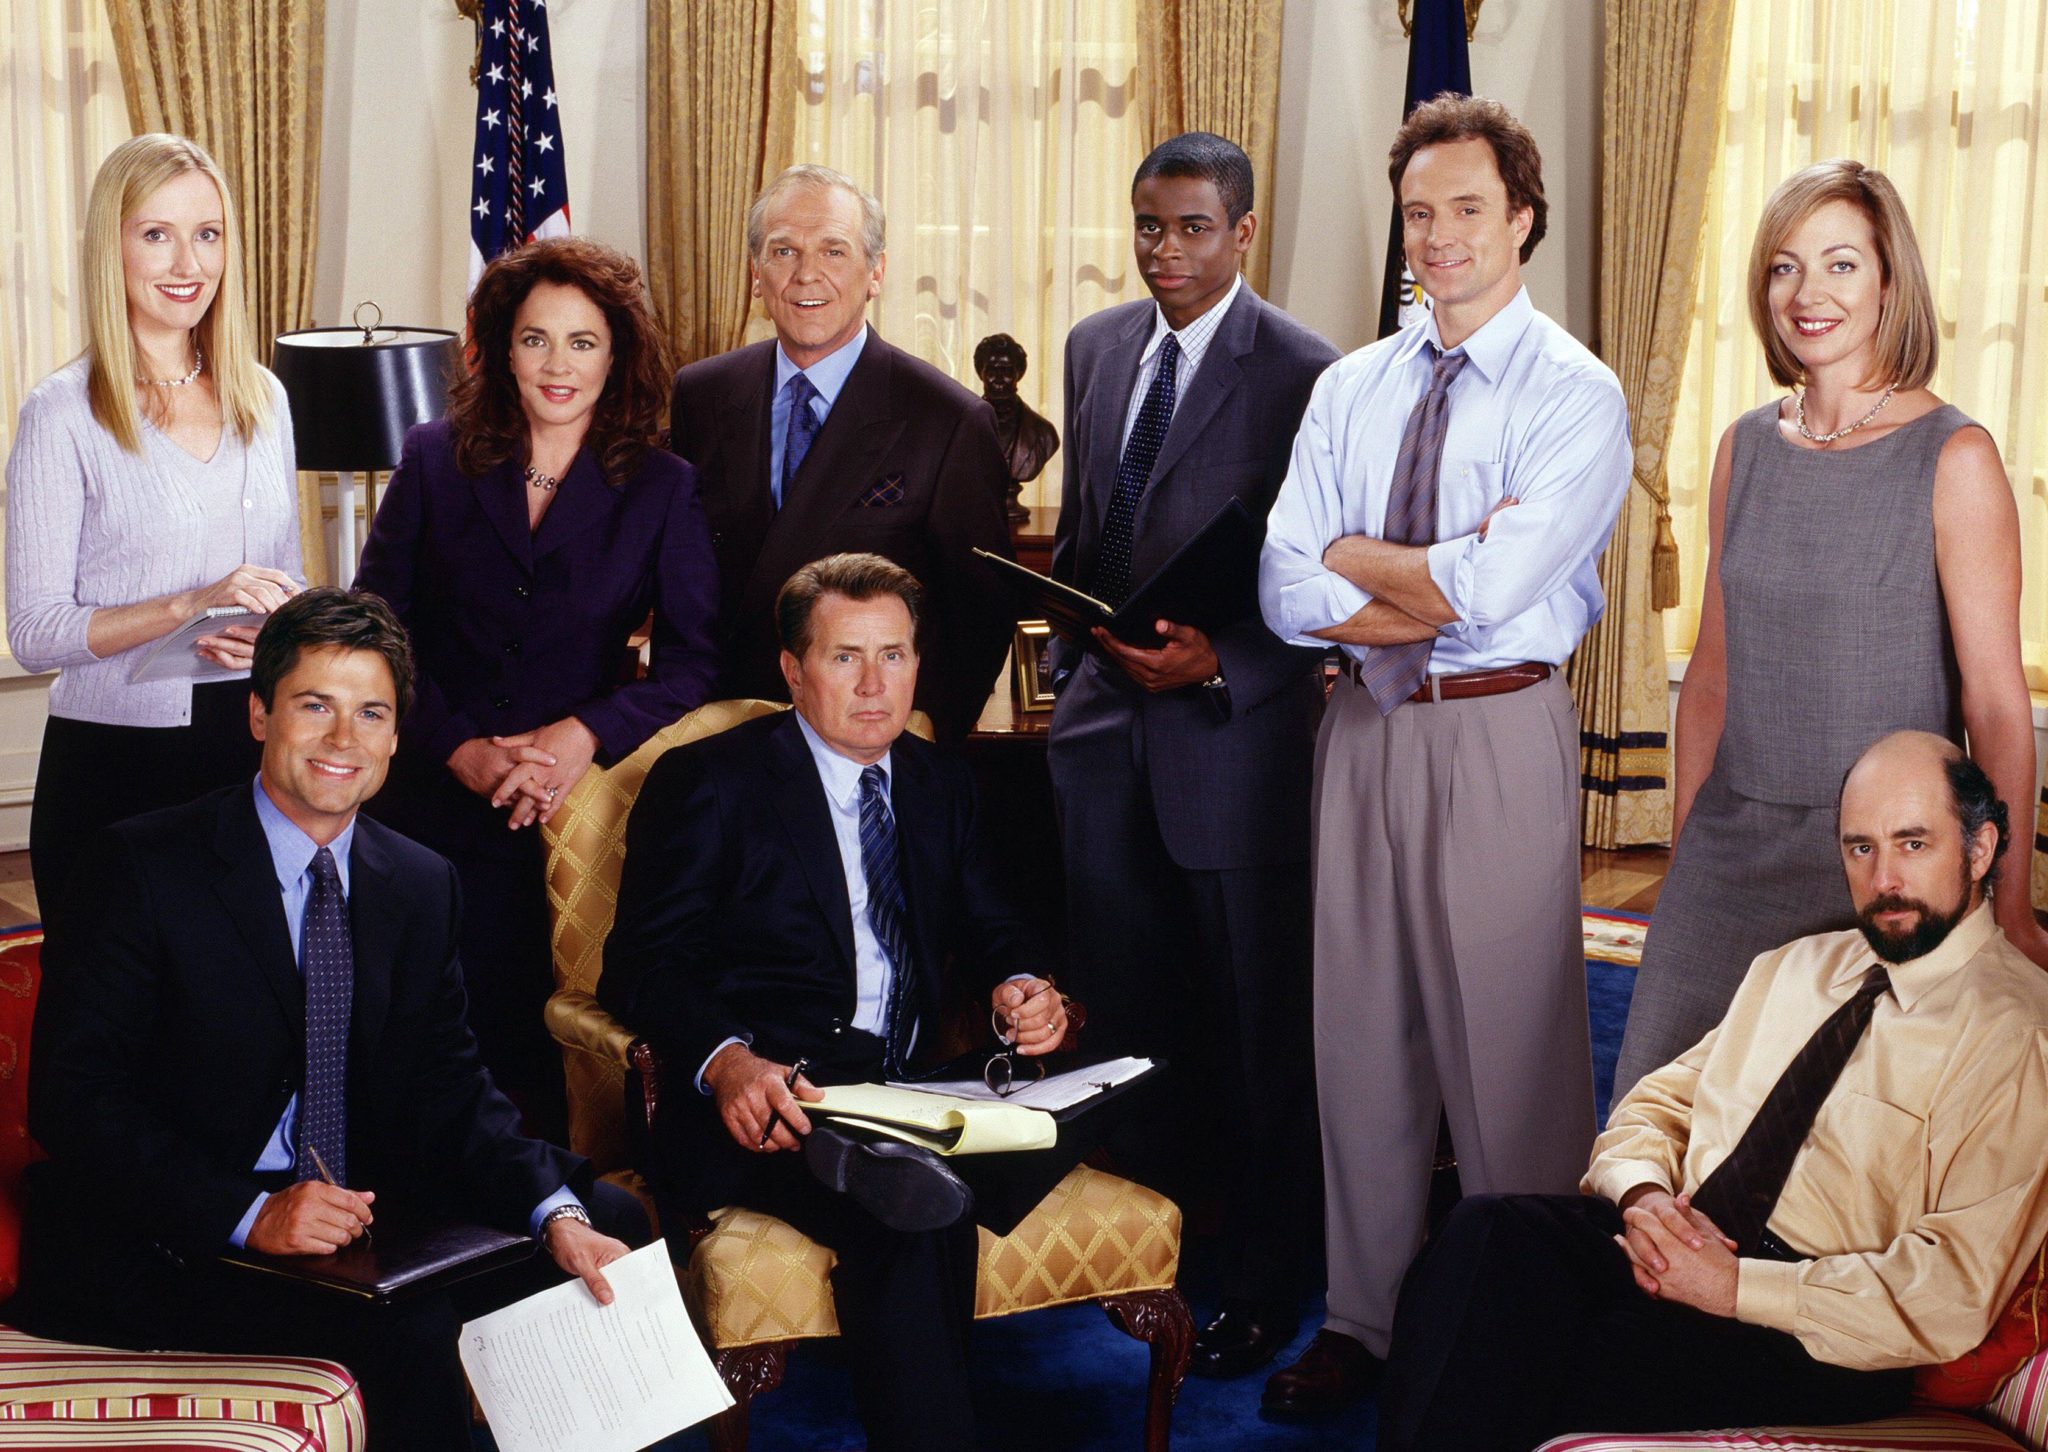 The cast of the West Wing. Image: LANDMARK MEDIA / Alamy Stock Photo